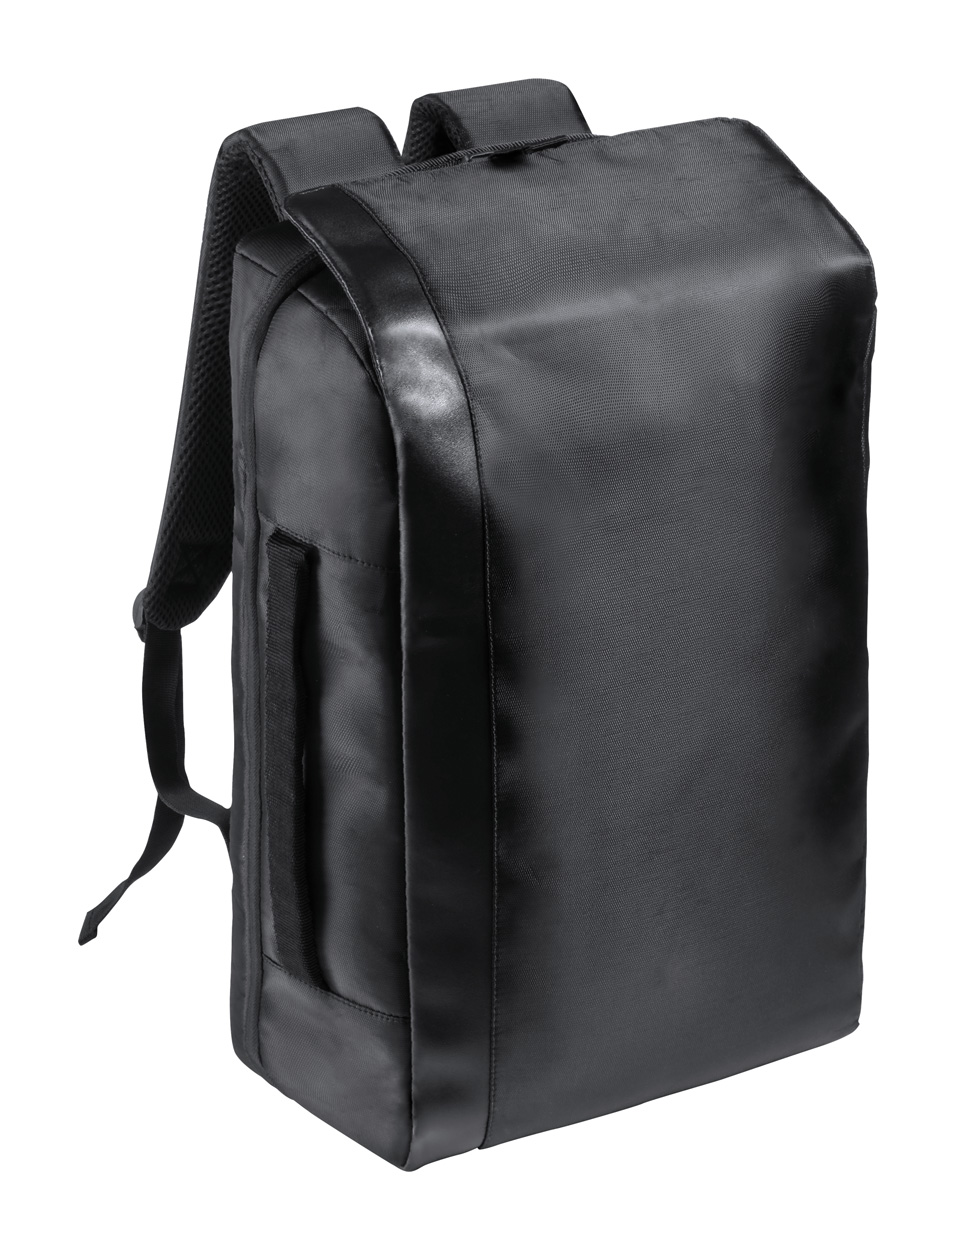 Sleiter backpack for documents - schwarz